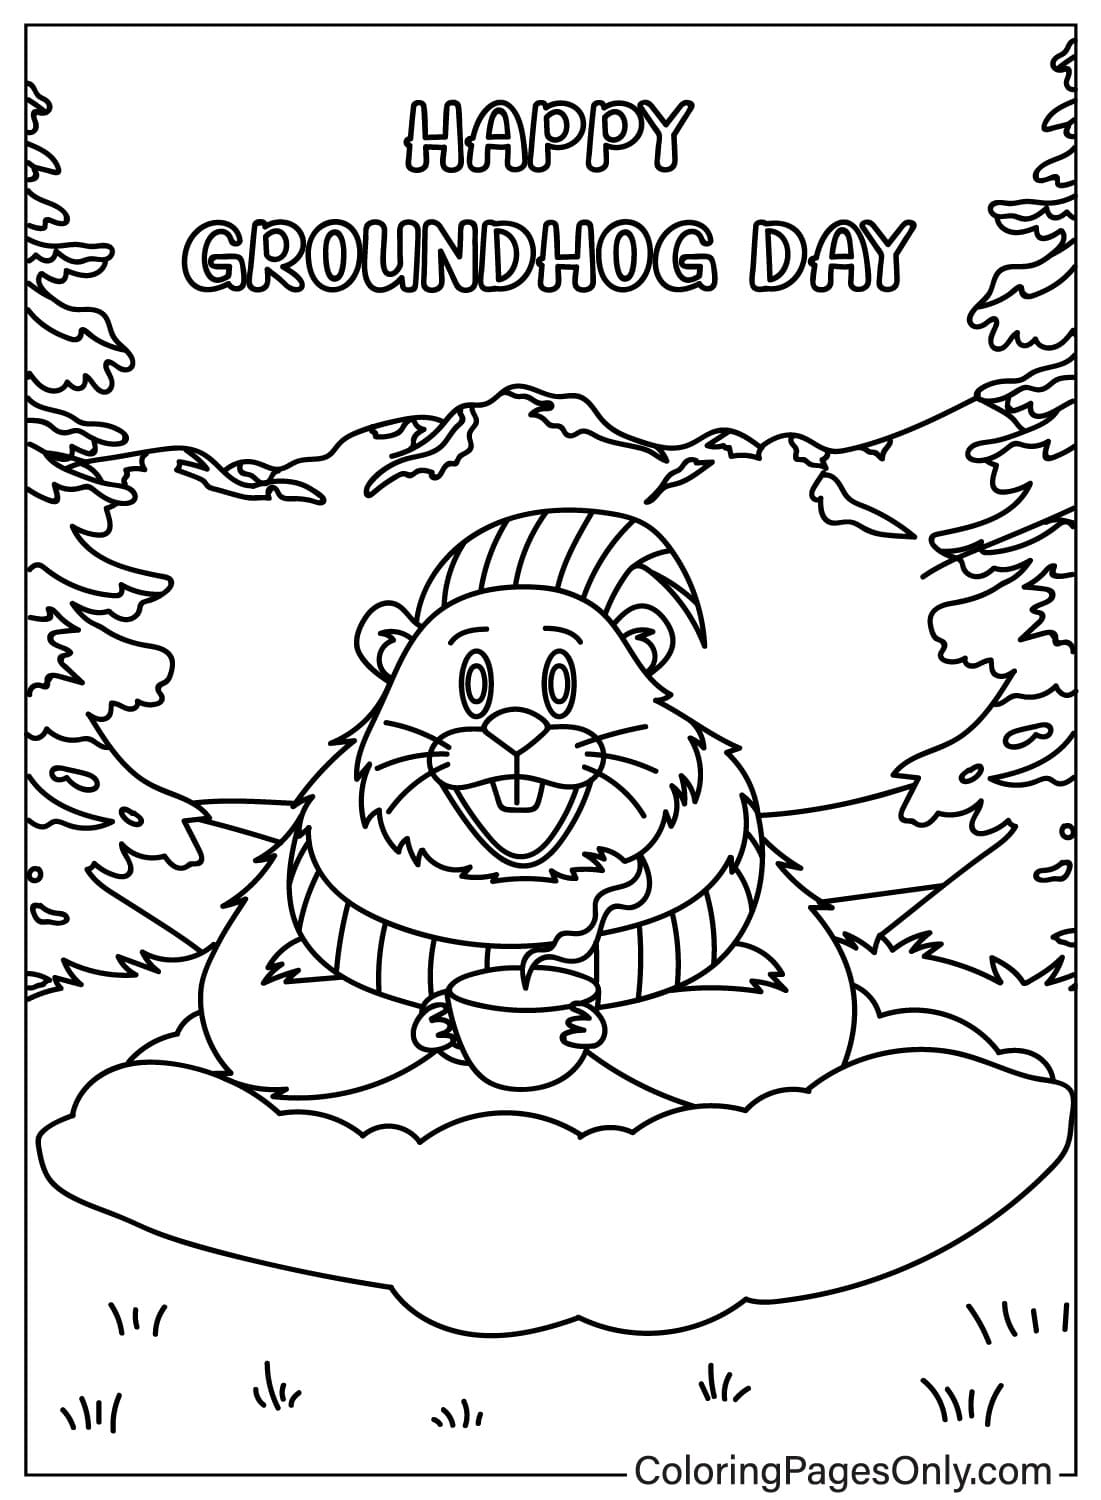 Kleurplaat Groundhog Day van Groundhog Day